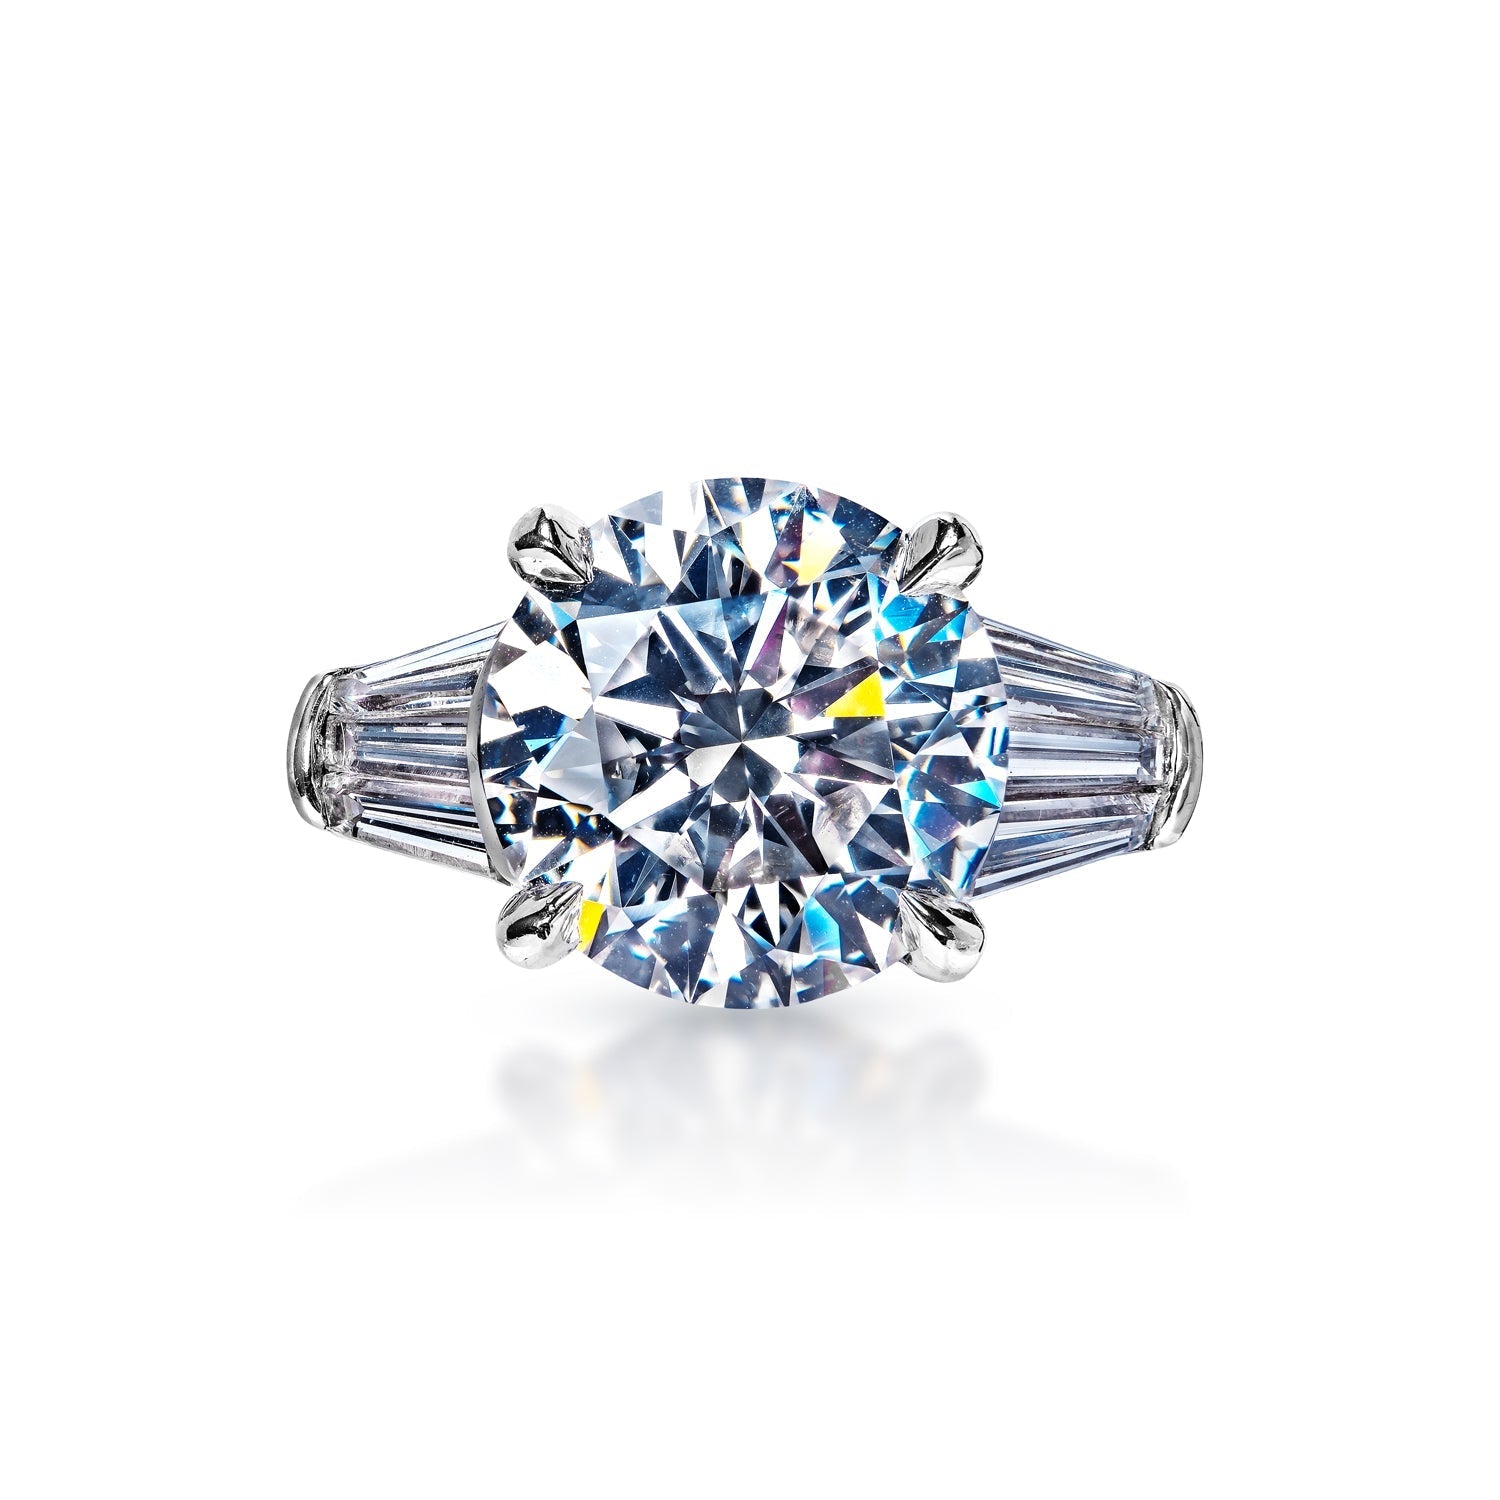 Alanna 6 Carats E VS1 Round Brilliant Diamond Engagement Ring in Platinum Front View